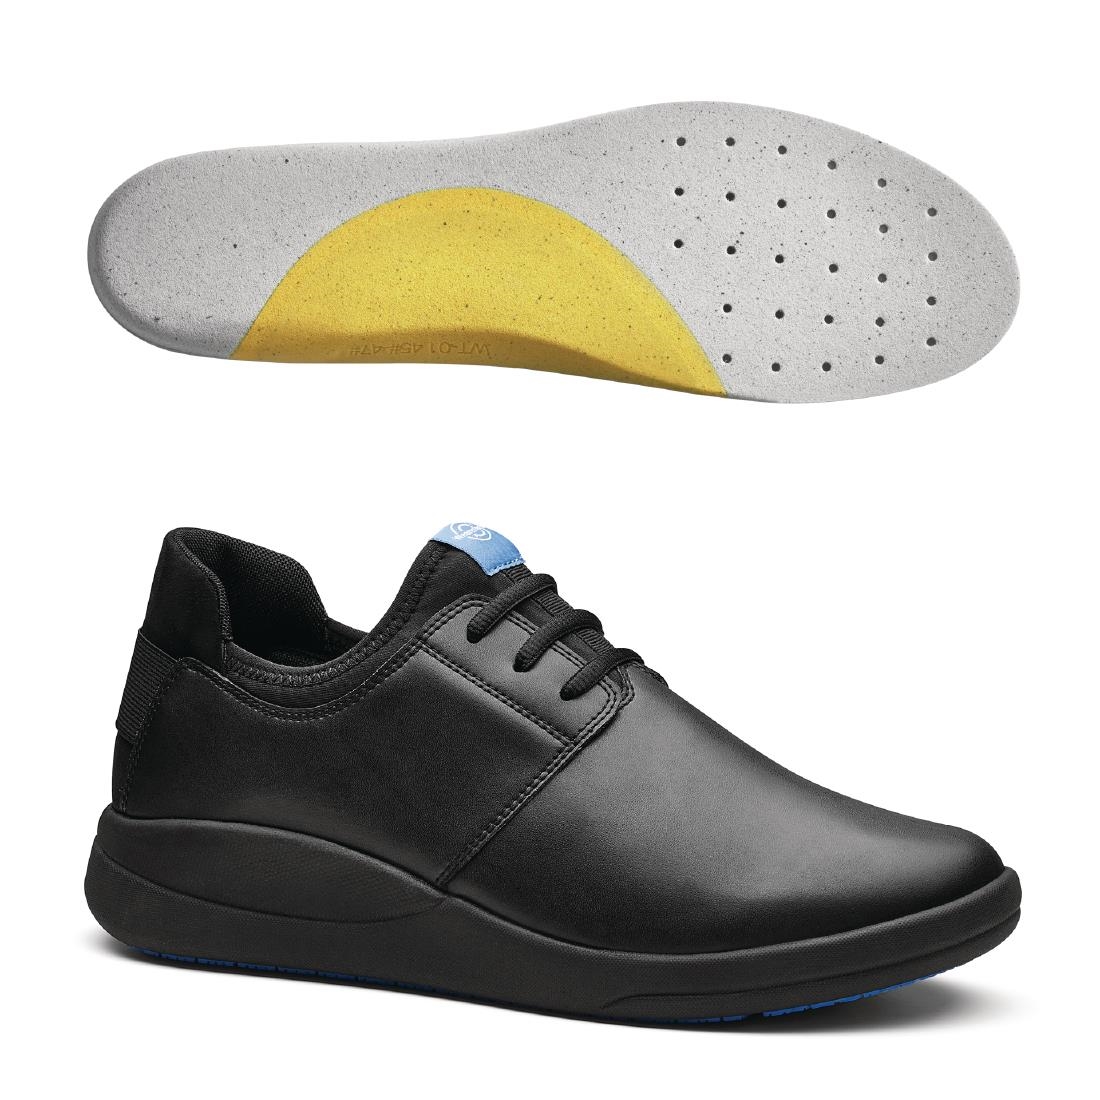 WearerTech Relieve Shoe Black with Soft Insoles Size 41